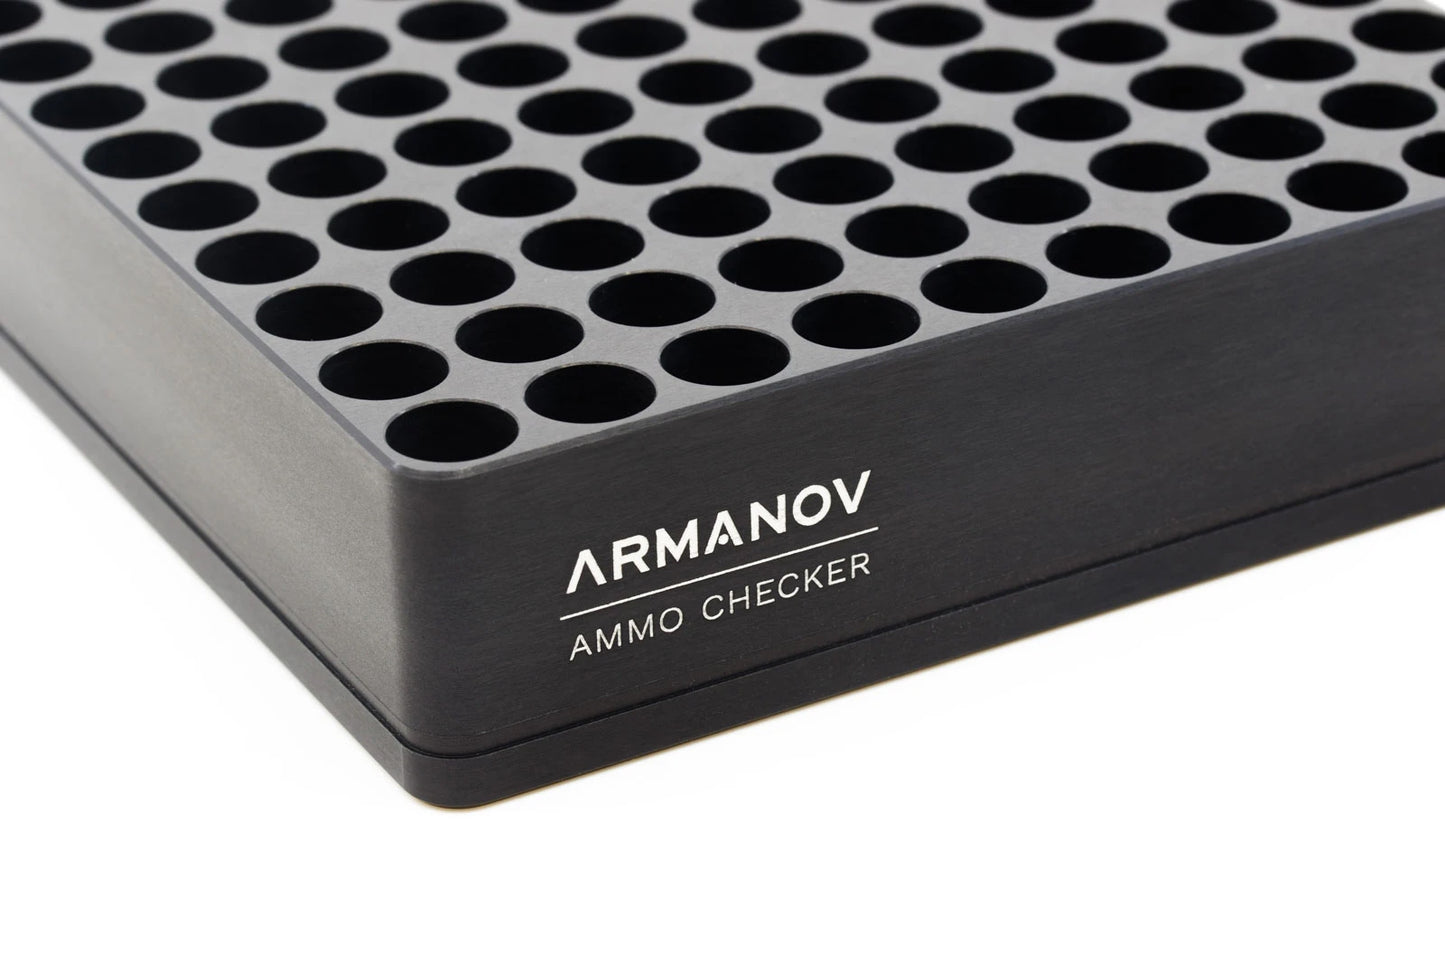 Armanov Ammo Checker Block 100 Rnd with Flip Cover